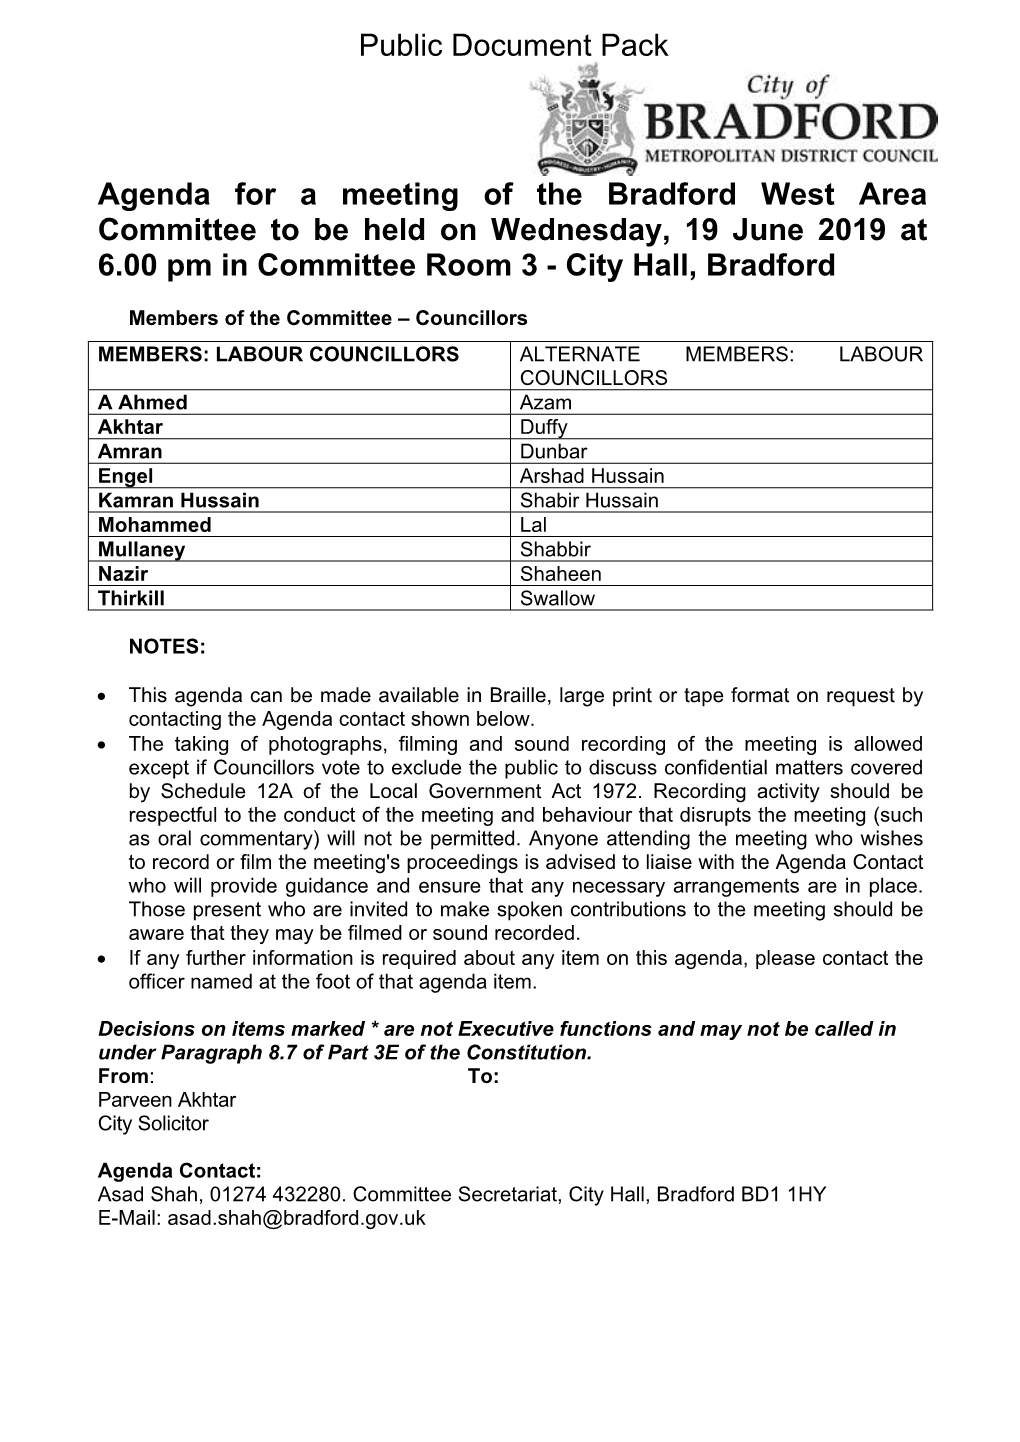 (Public Pack)Agenda Document for Bradford West Area Committee, 19